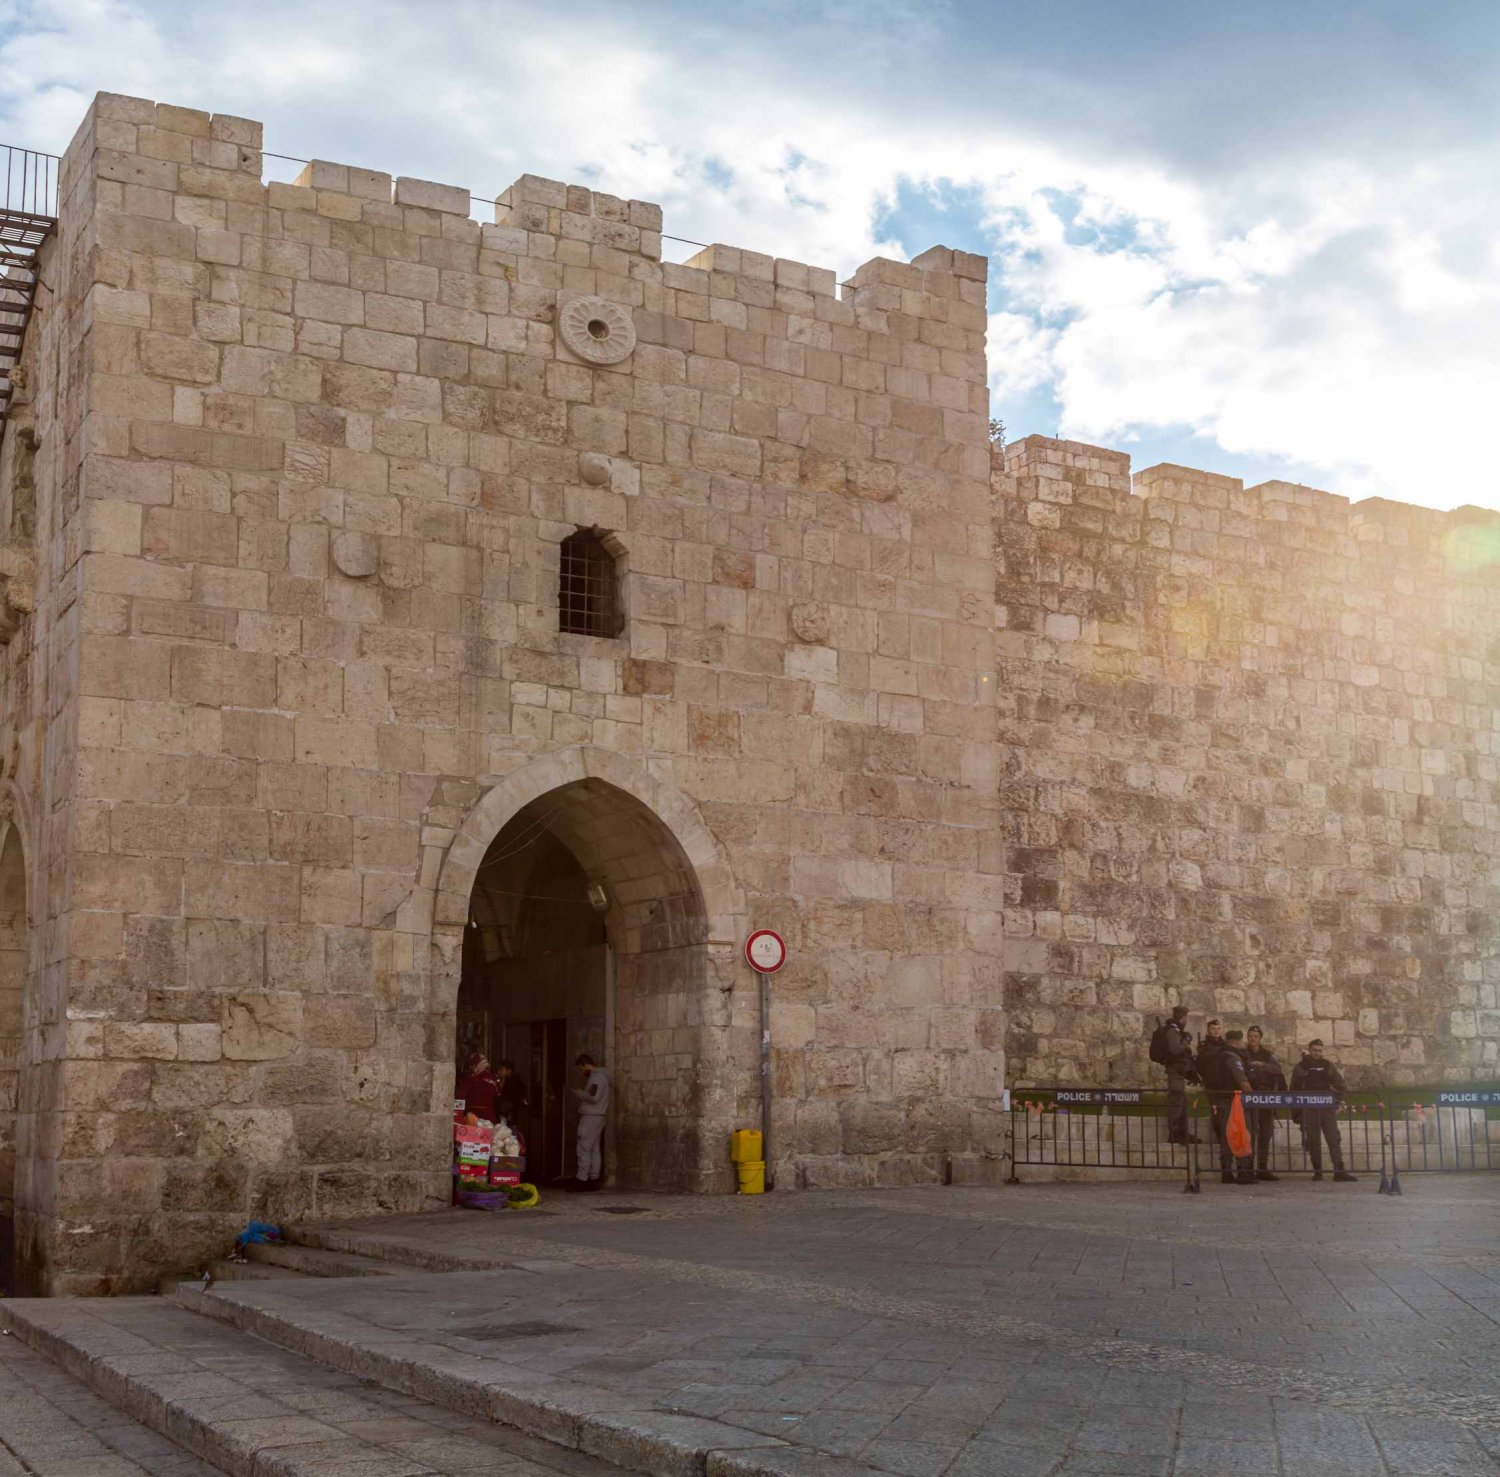 Herod’s Gate or Bab al-Zahra, one of the gates to Jerusalem's Old City